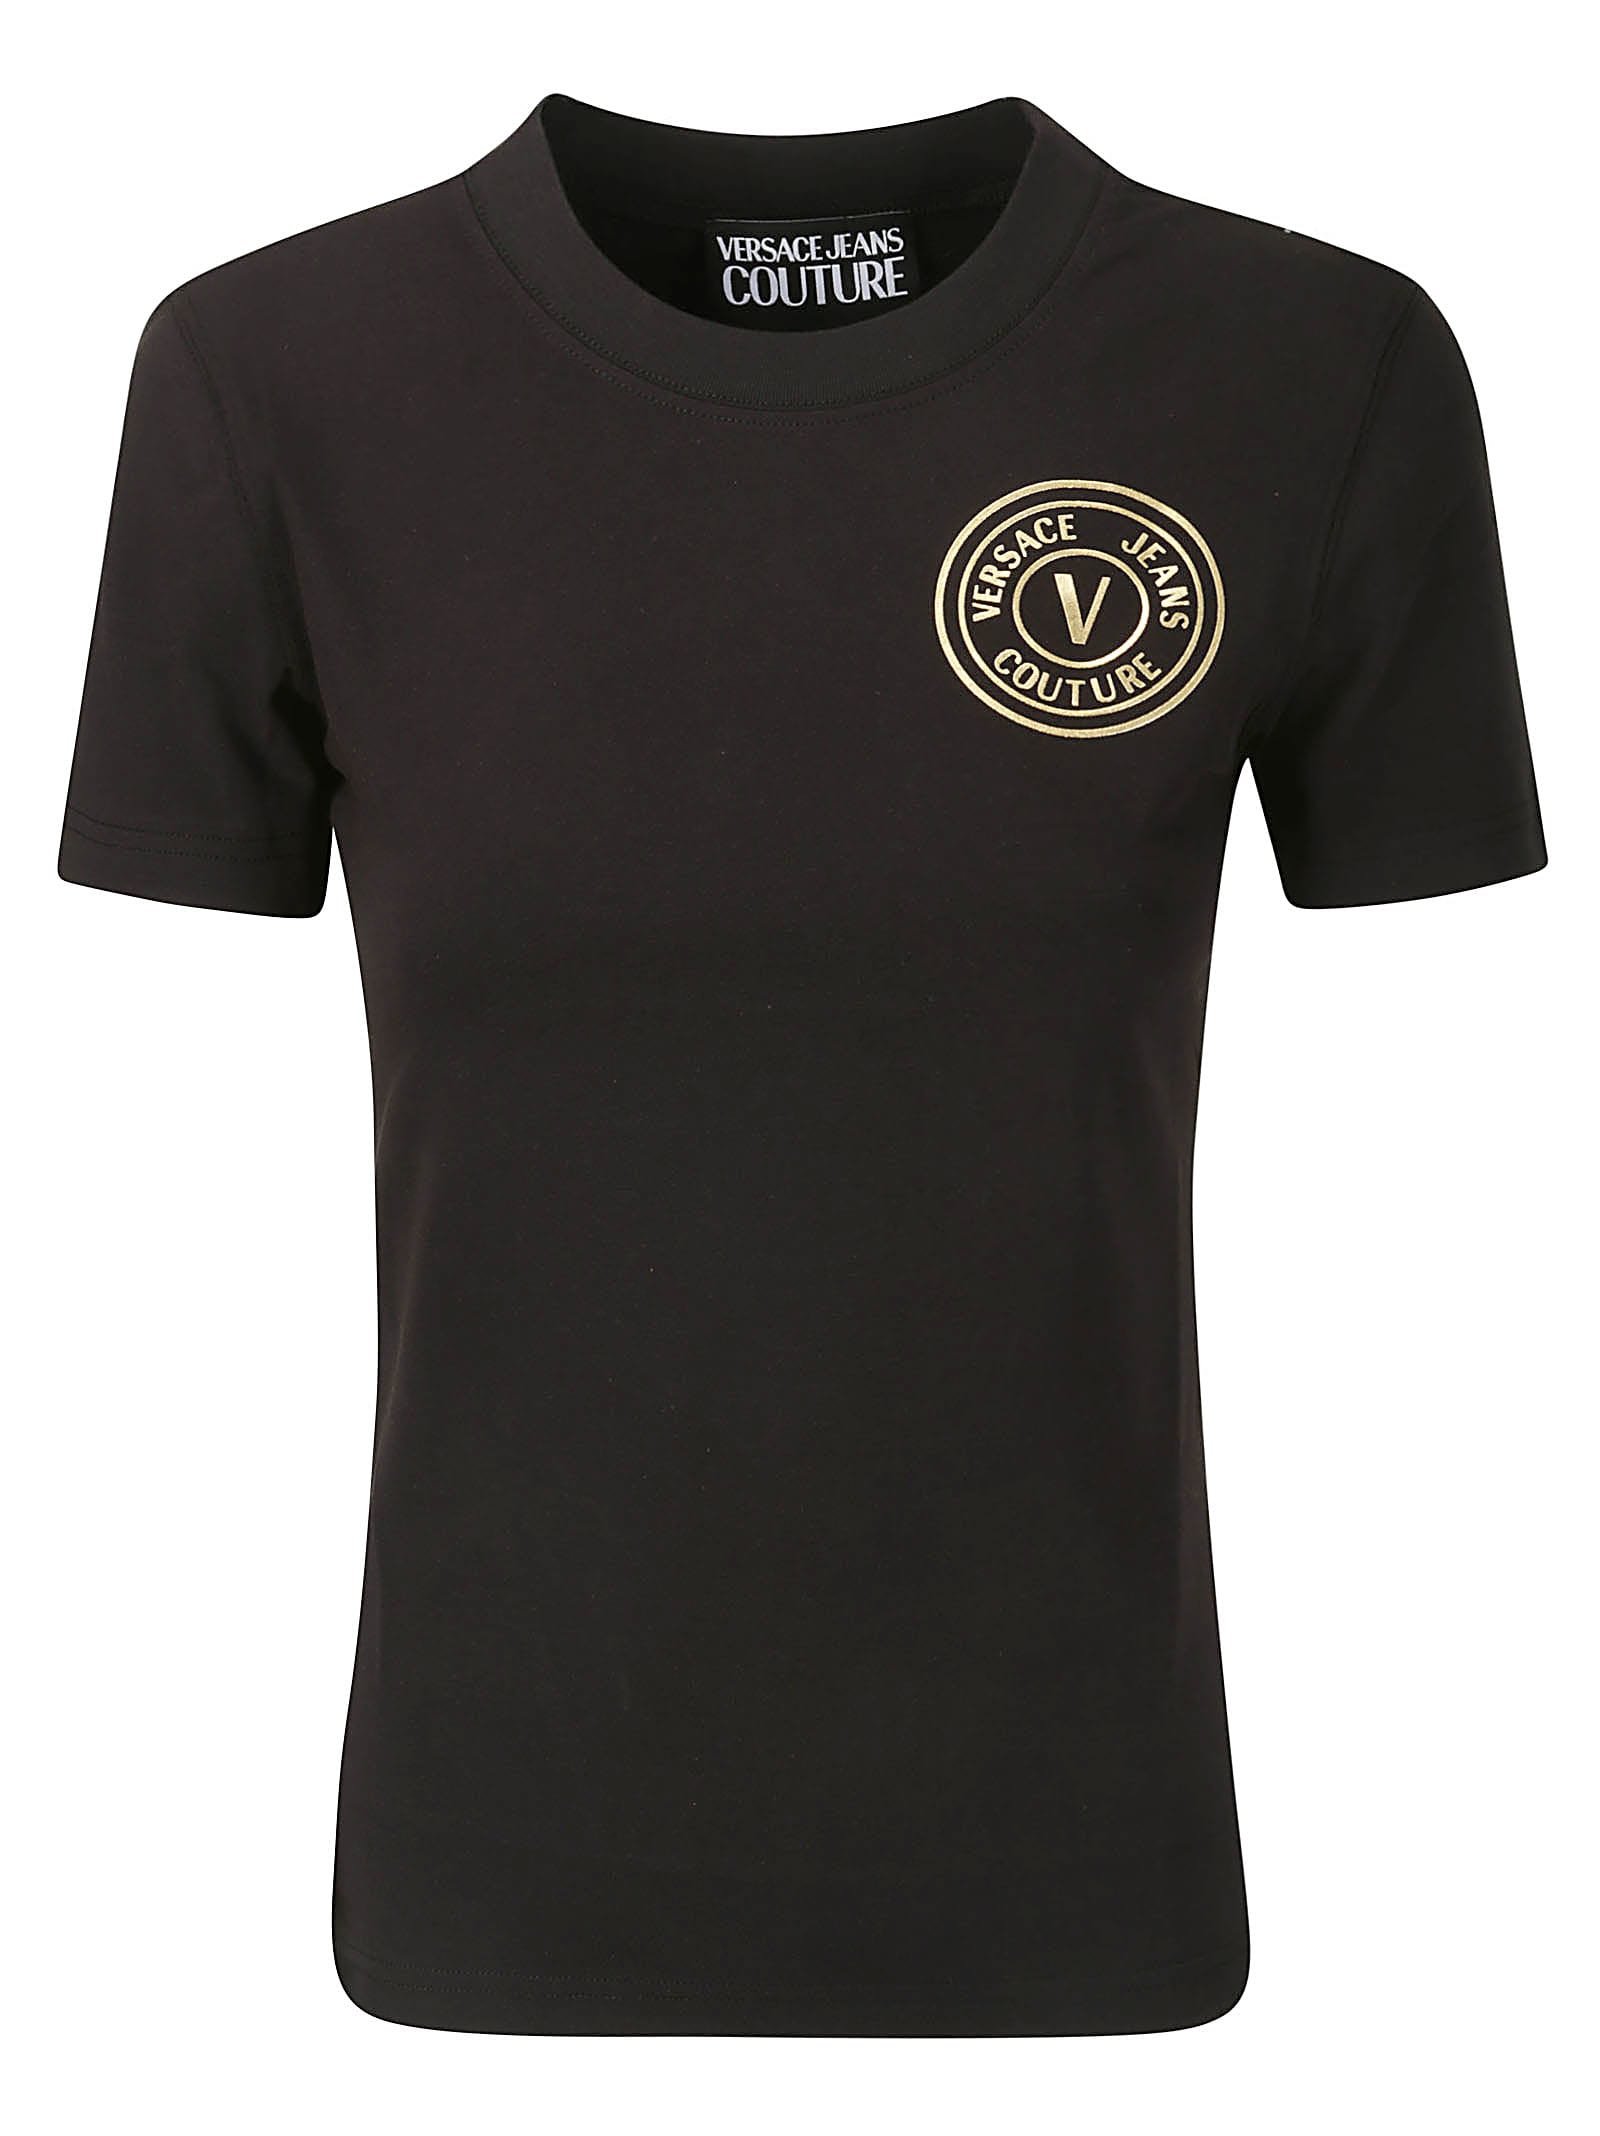 Versace Jeans Couture 76dp608 S S Vembl S Thick Foil T-shirt In Black/gold